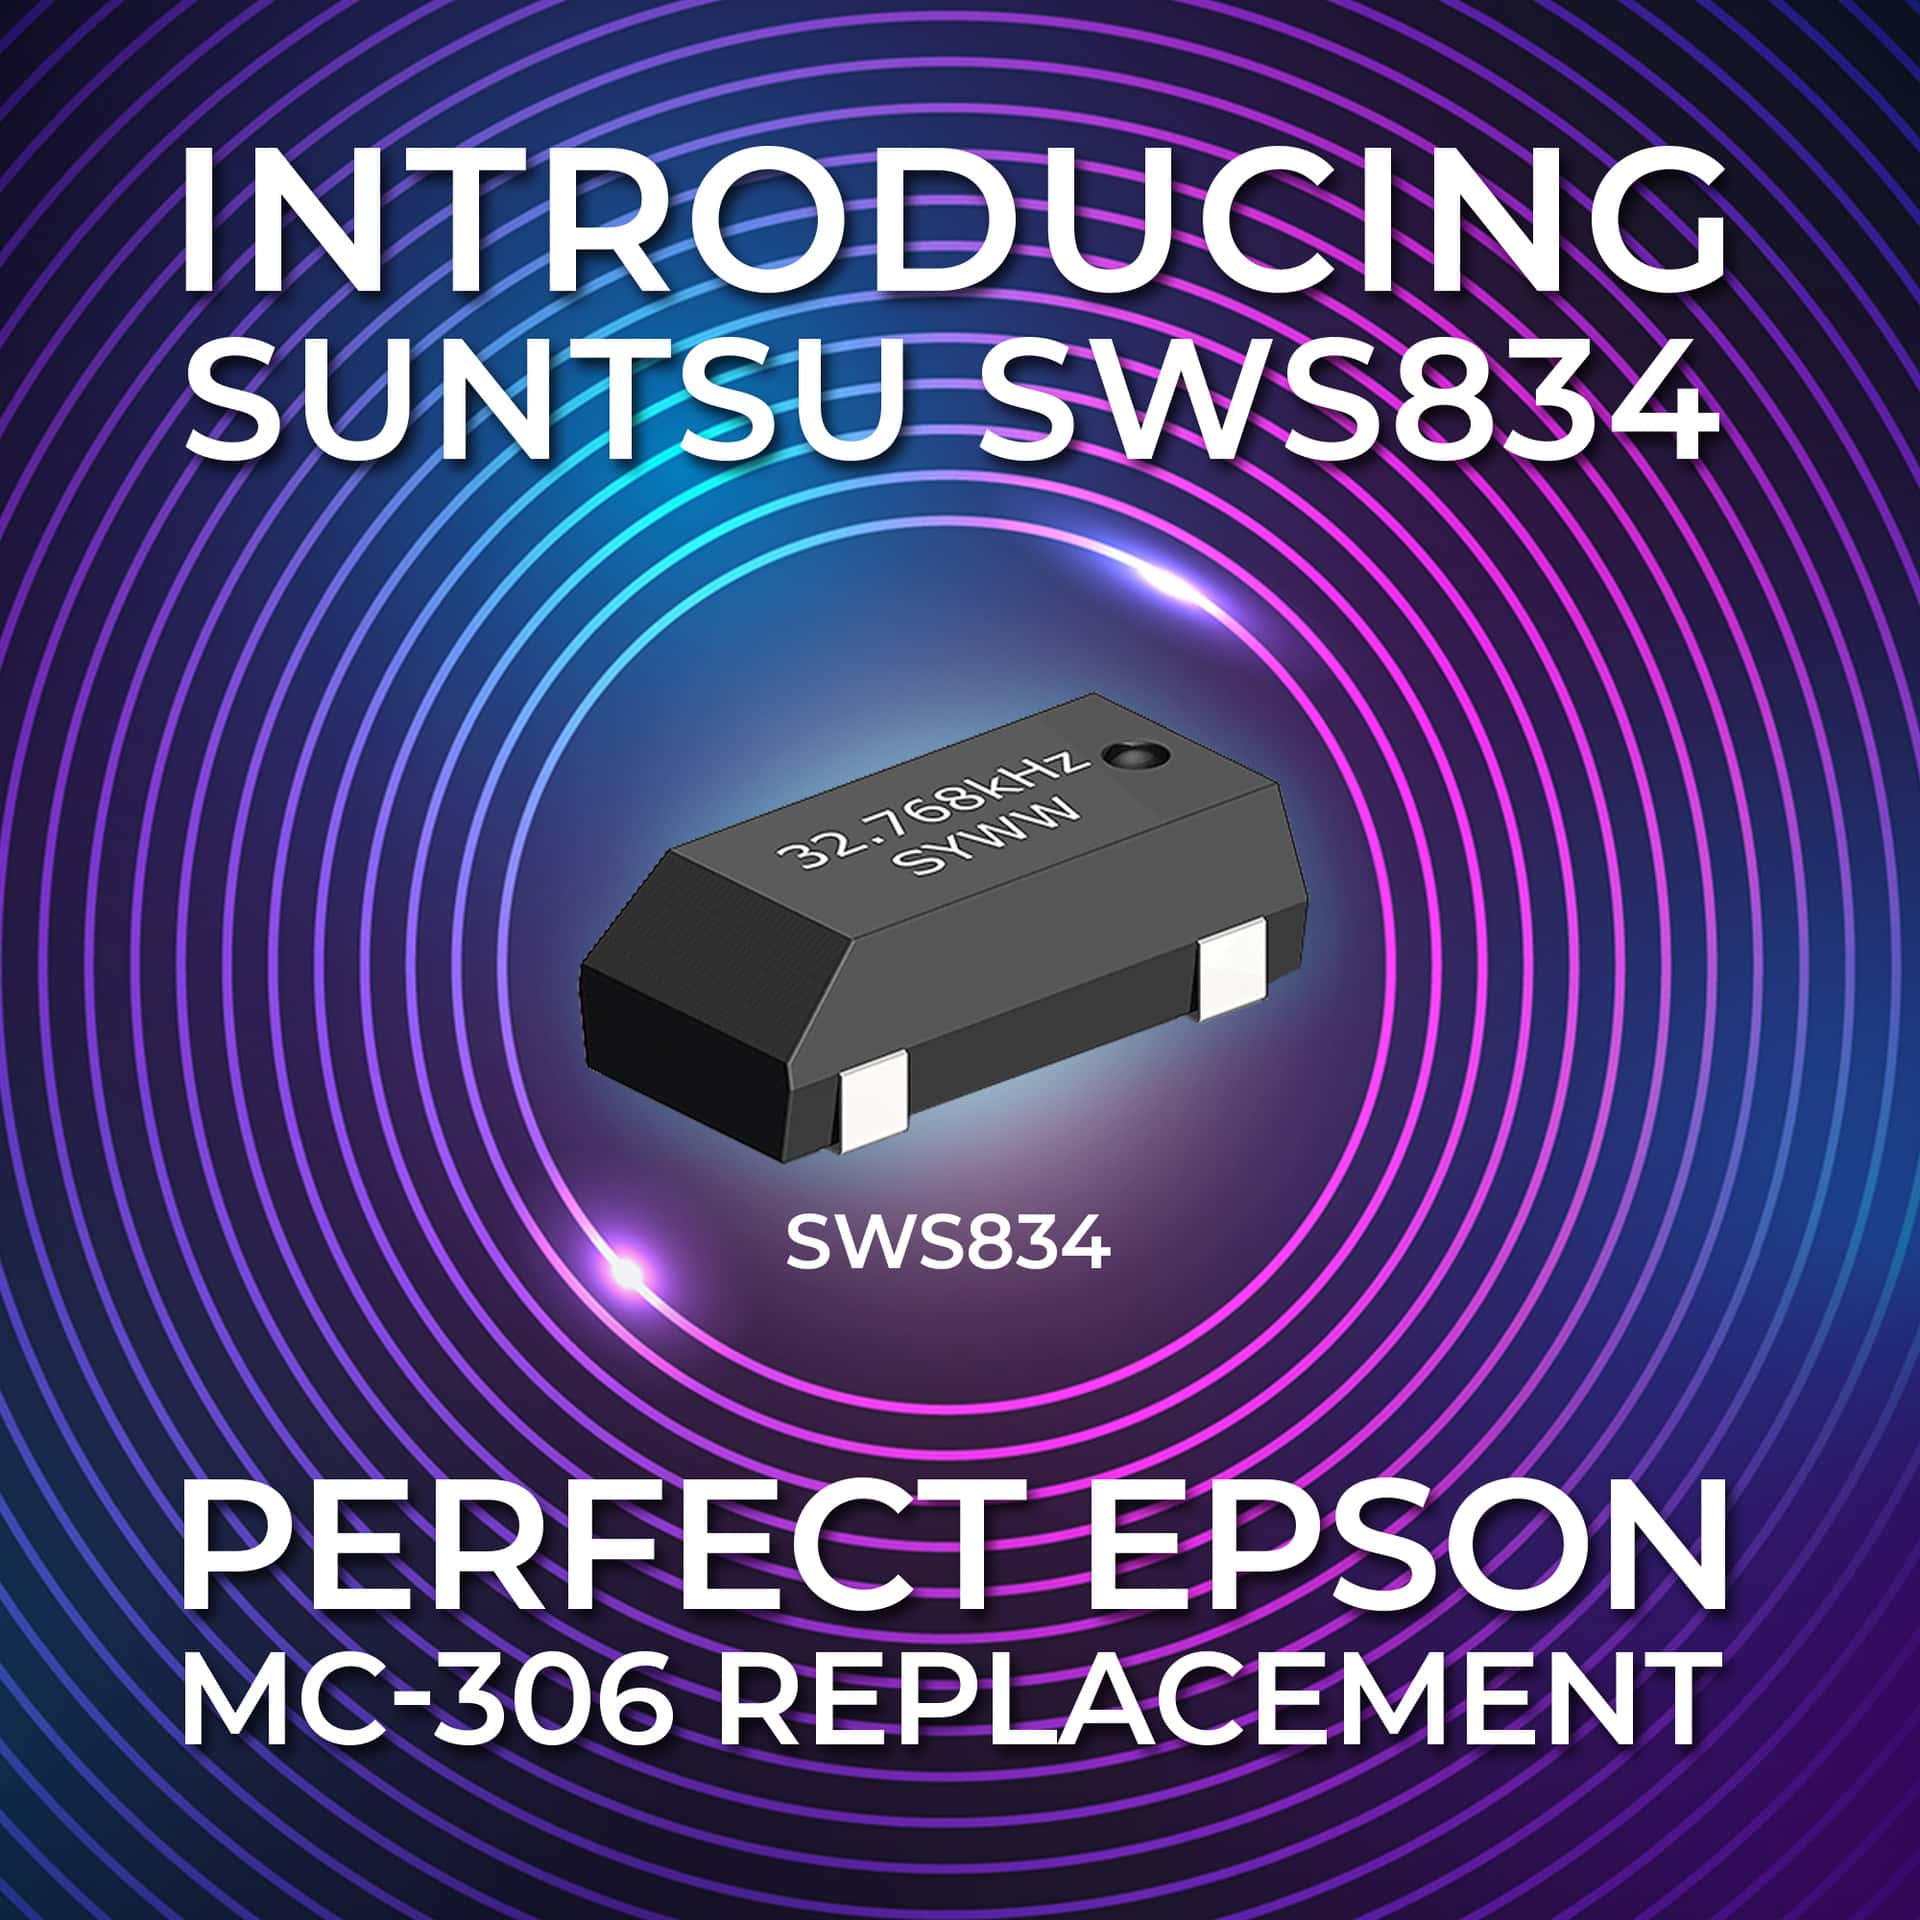 Suntsu Frequency Control SWS834